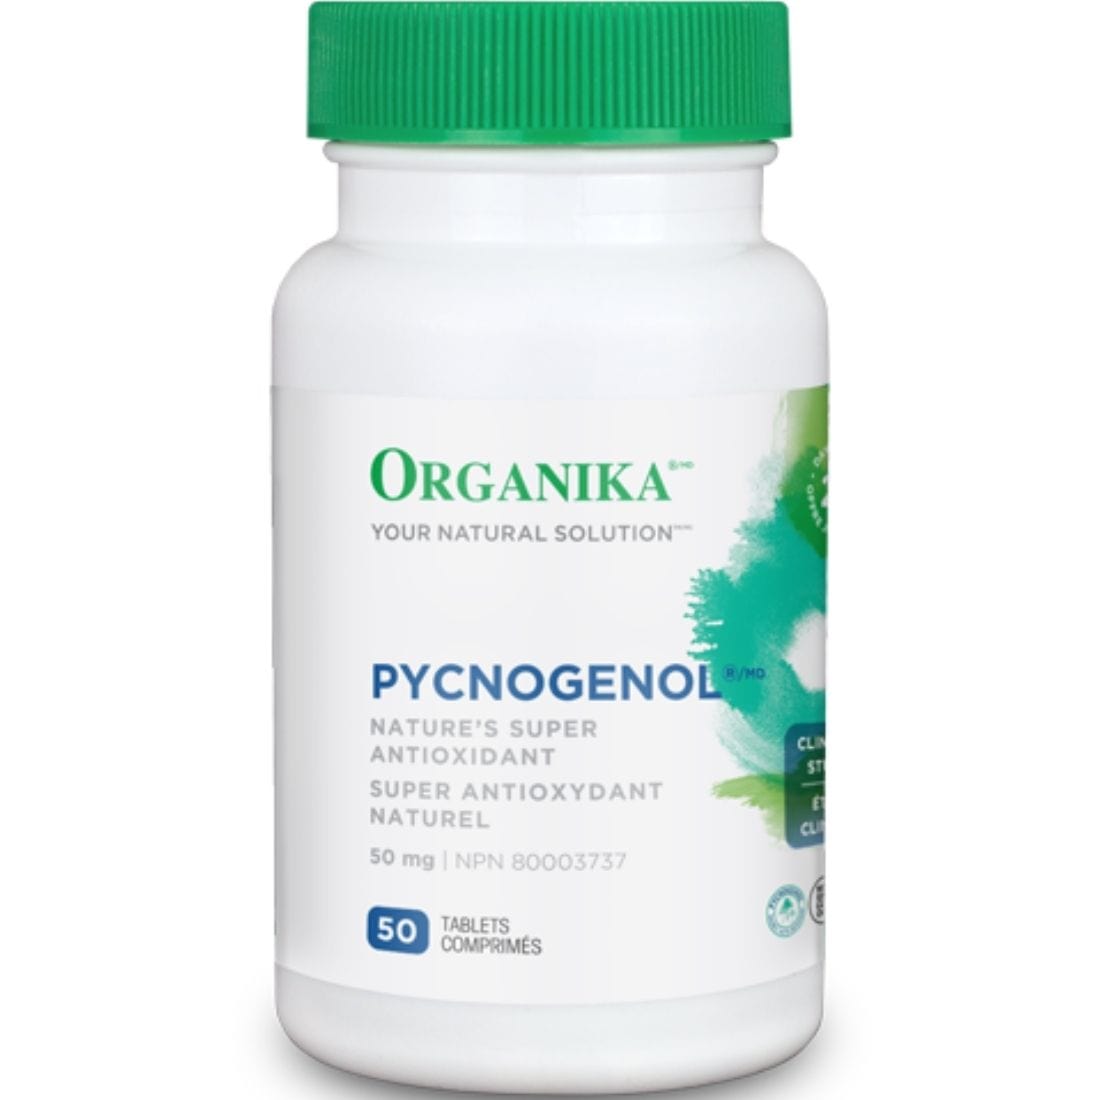 Organika Pycnogenol 50mg Tablets